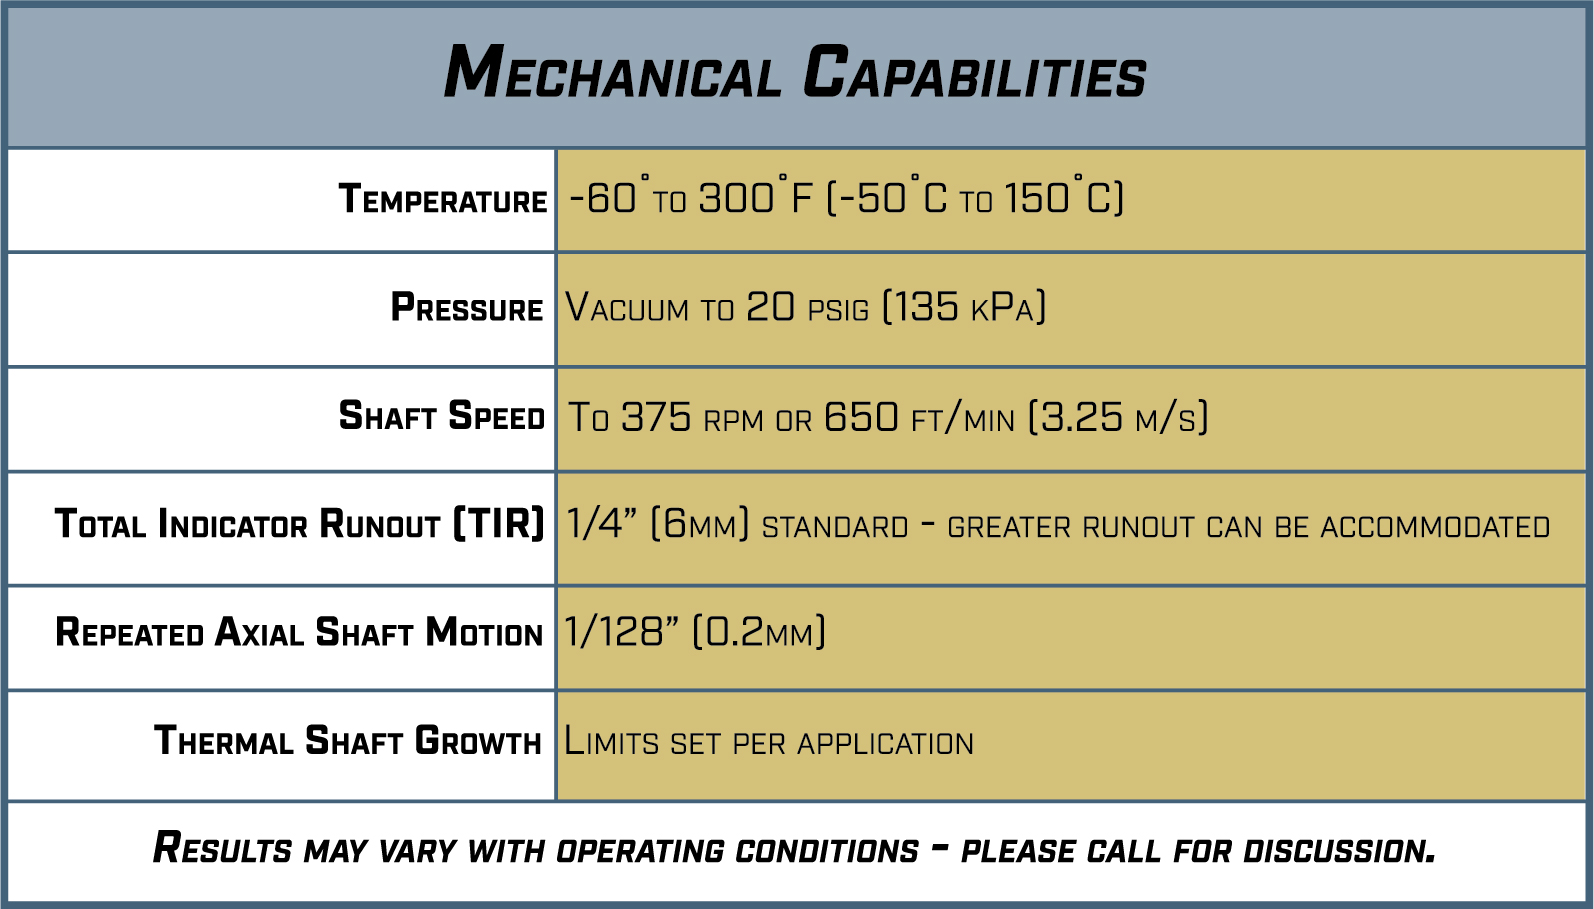 Figure 4: Mechanical capabilities. Source: MECO Seals